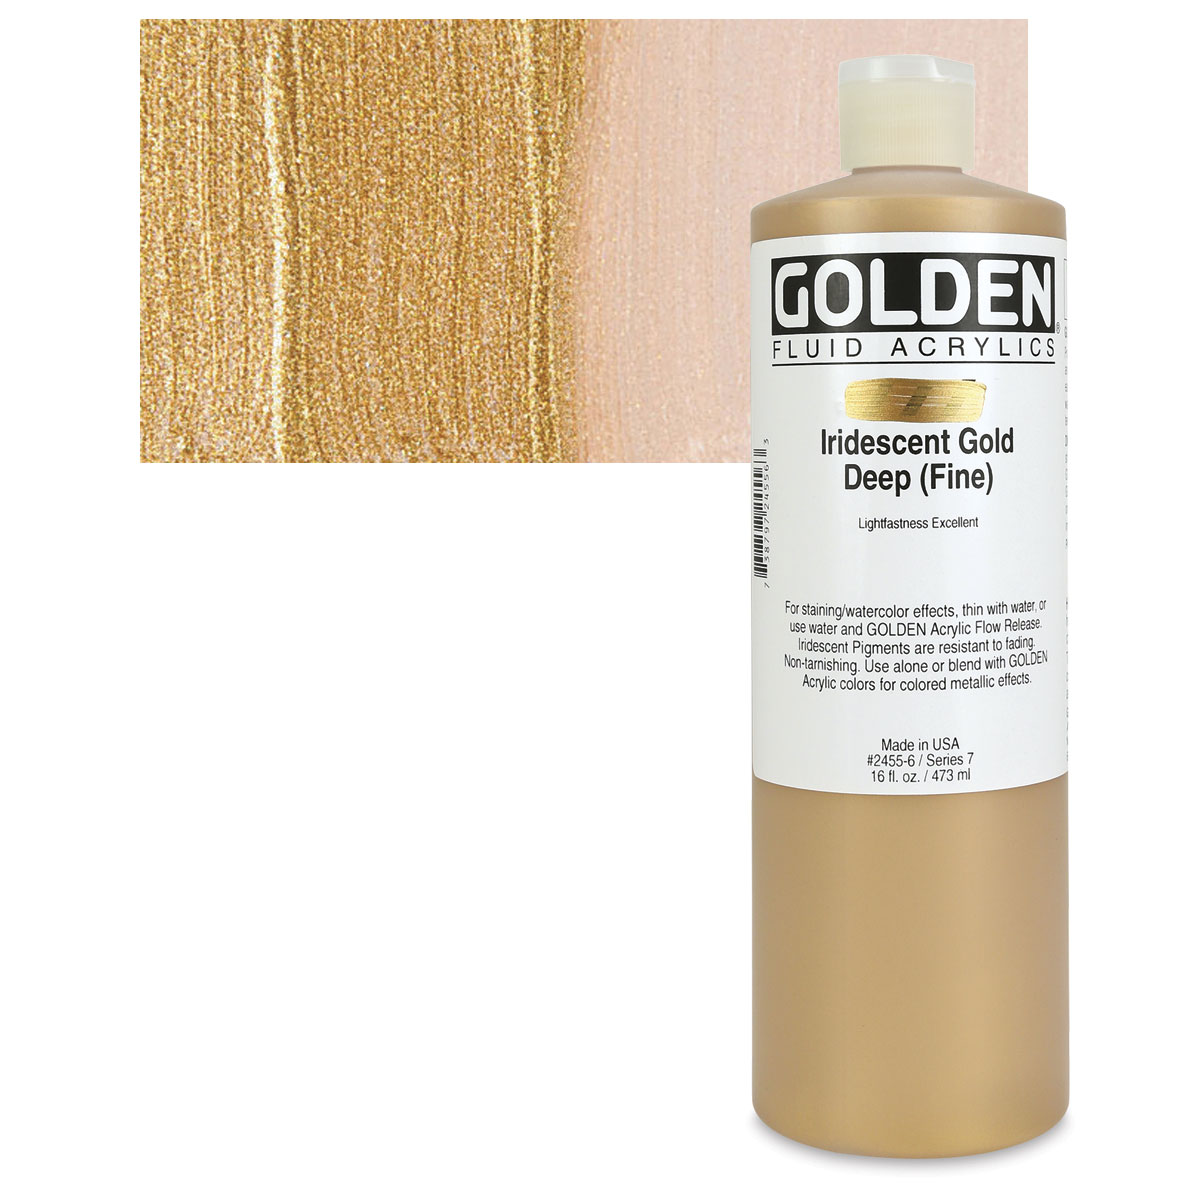 Golden Fluid Acrylic Iridescent Gold Deep (Fine) 16 oz